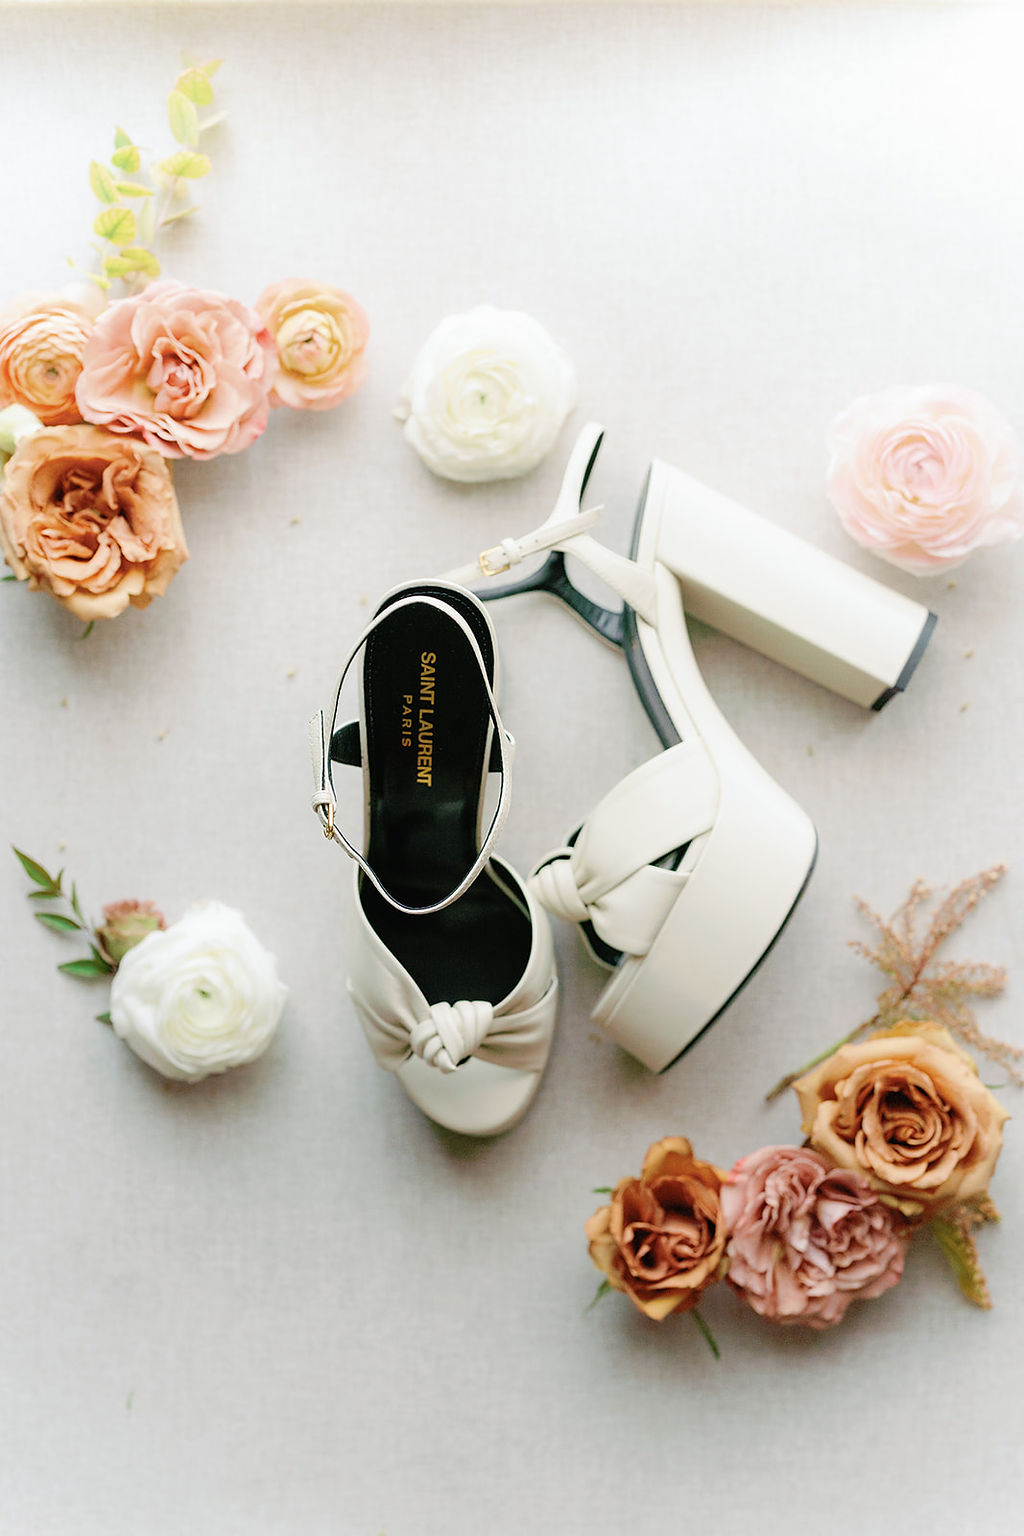 platform Sain Laurent sandals for wedding shoes